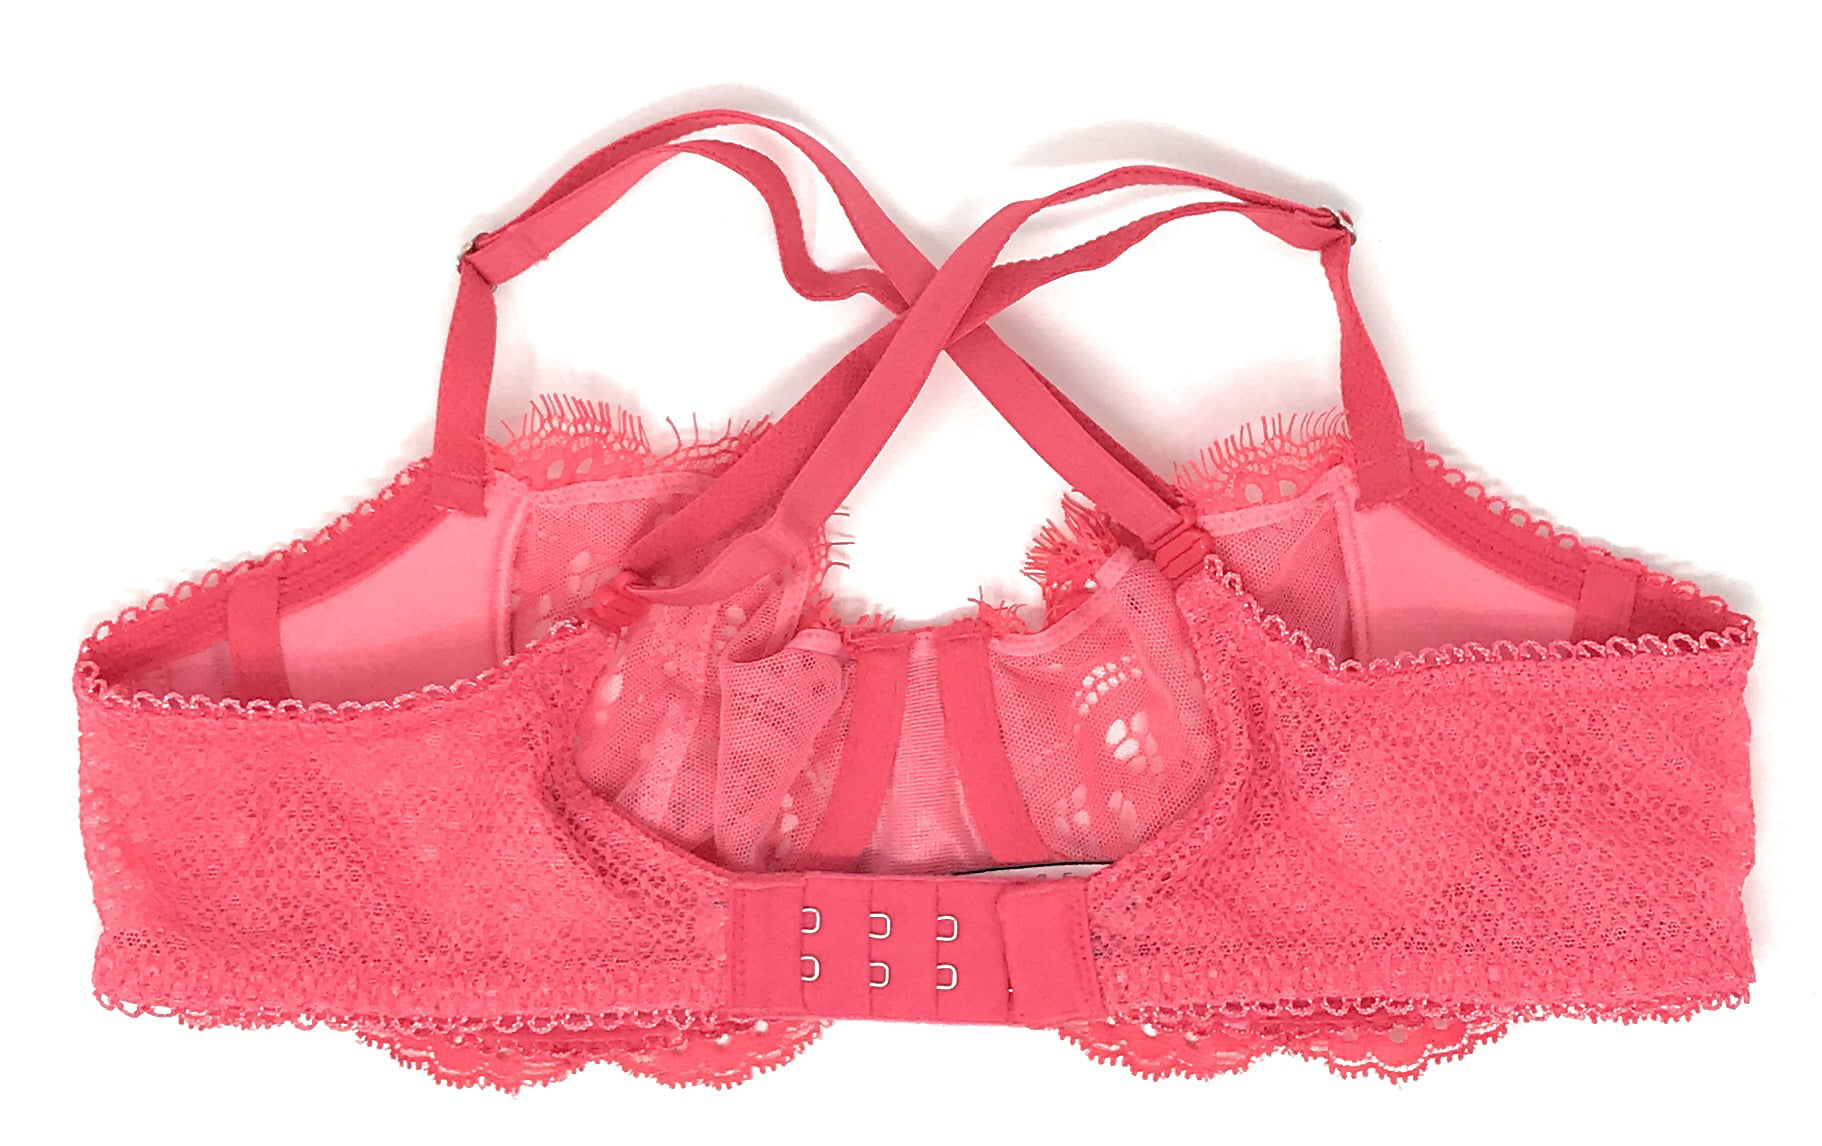 Victoria's Secret Dream Angels Wicked Velvet Unlined Demi Bra Pink Size 34  D - $23 - From Emily